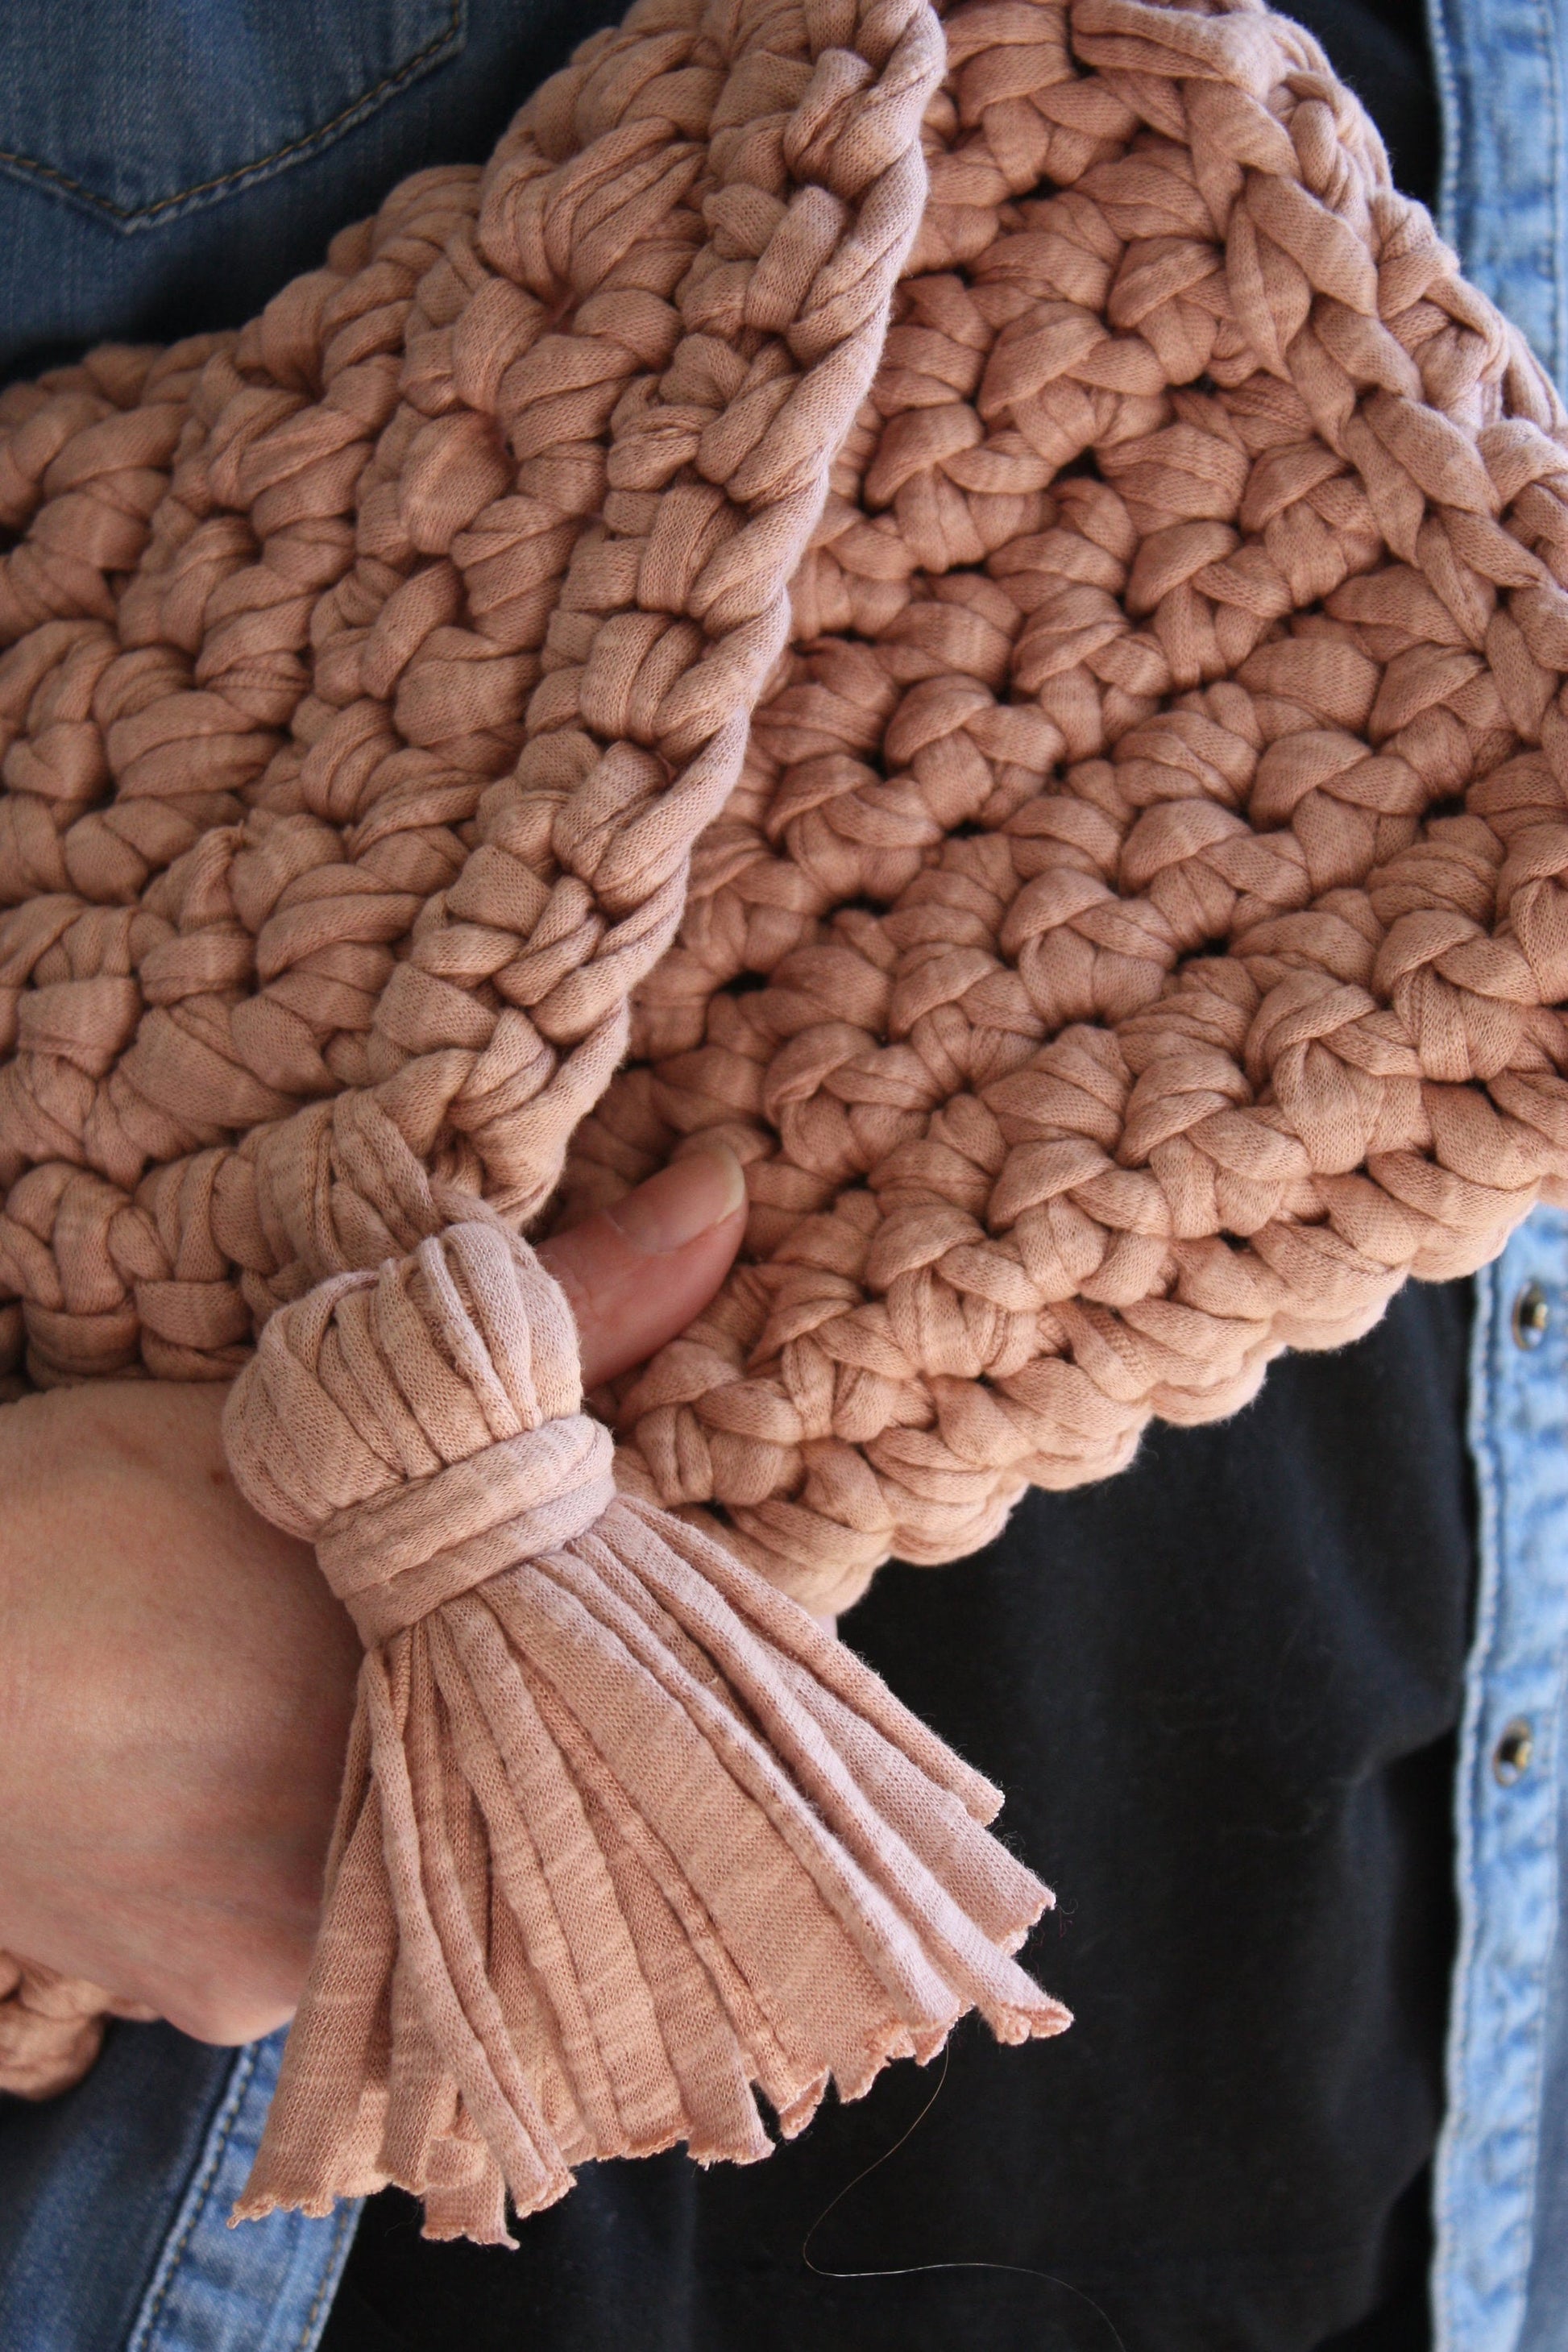 Thick T-shirt Yarn: Photo Tutorial and Video Tutorial - Winding Road Crochet